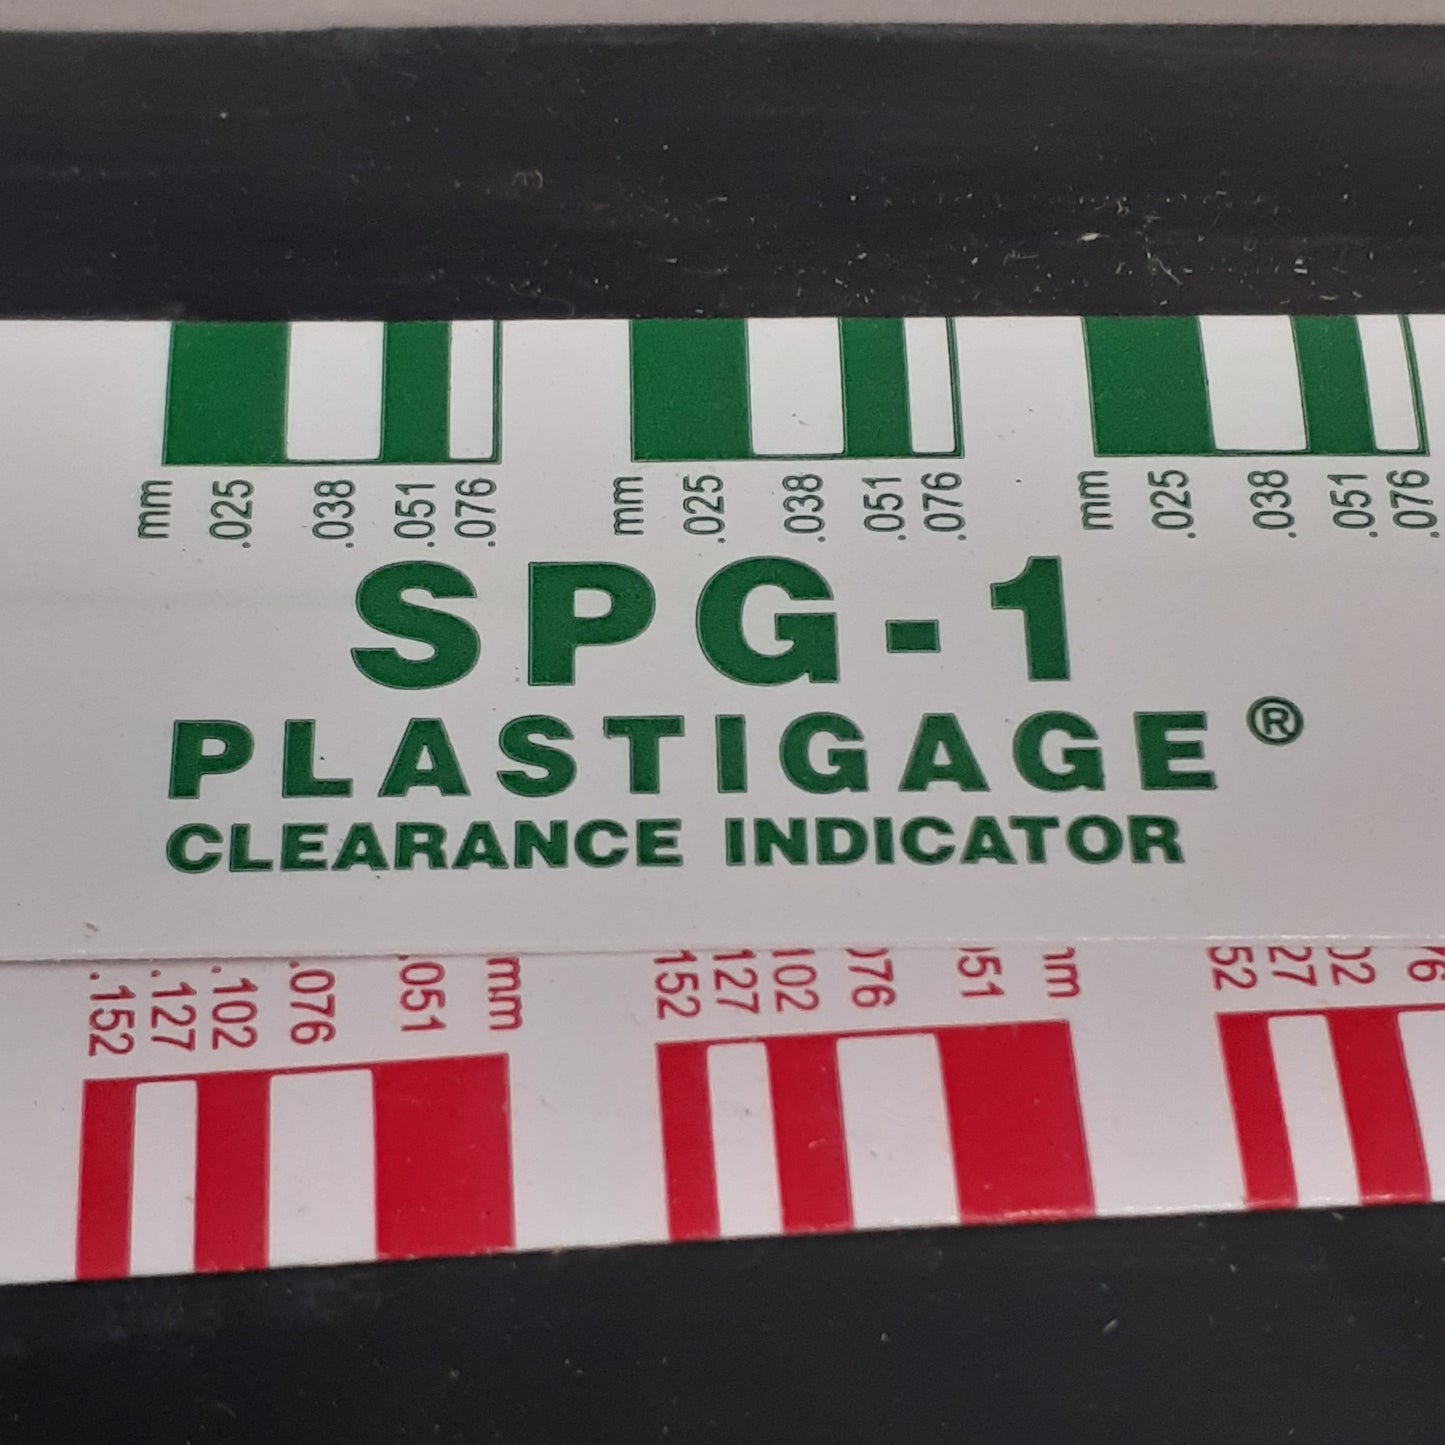 Sealed Power Multi-Function Tool Plastigage Clearance Indicator SPGR-1 (New)